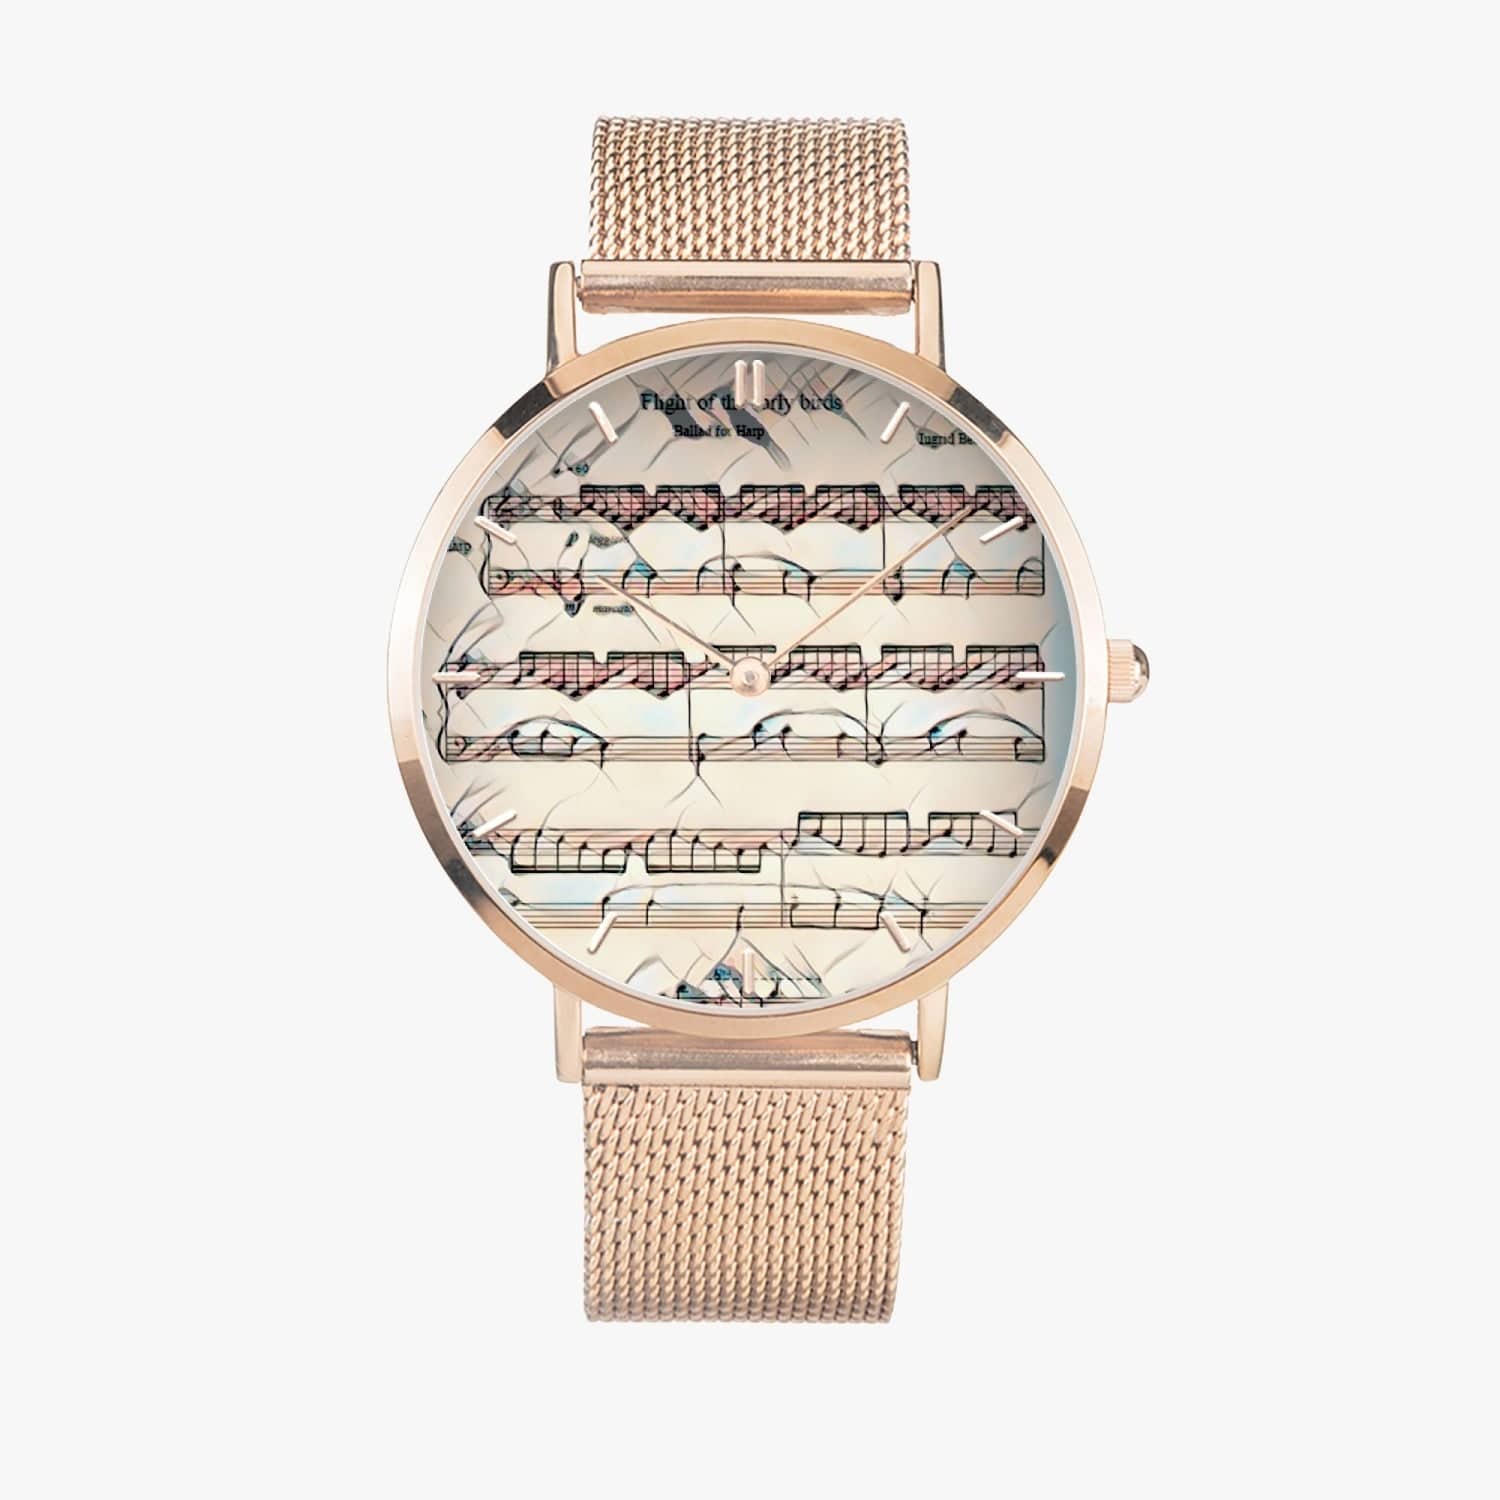 Music Time. Fashion Ultra-thin Stainless Steel Quartz Watch. Designer watch by Sensus Studio design